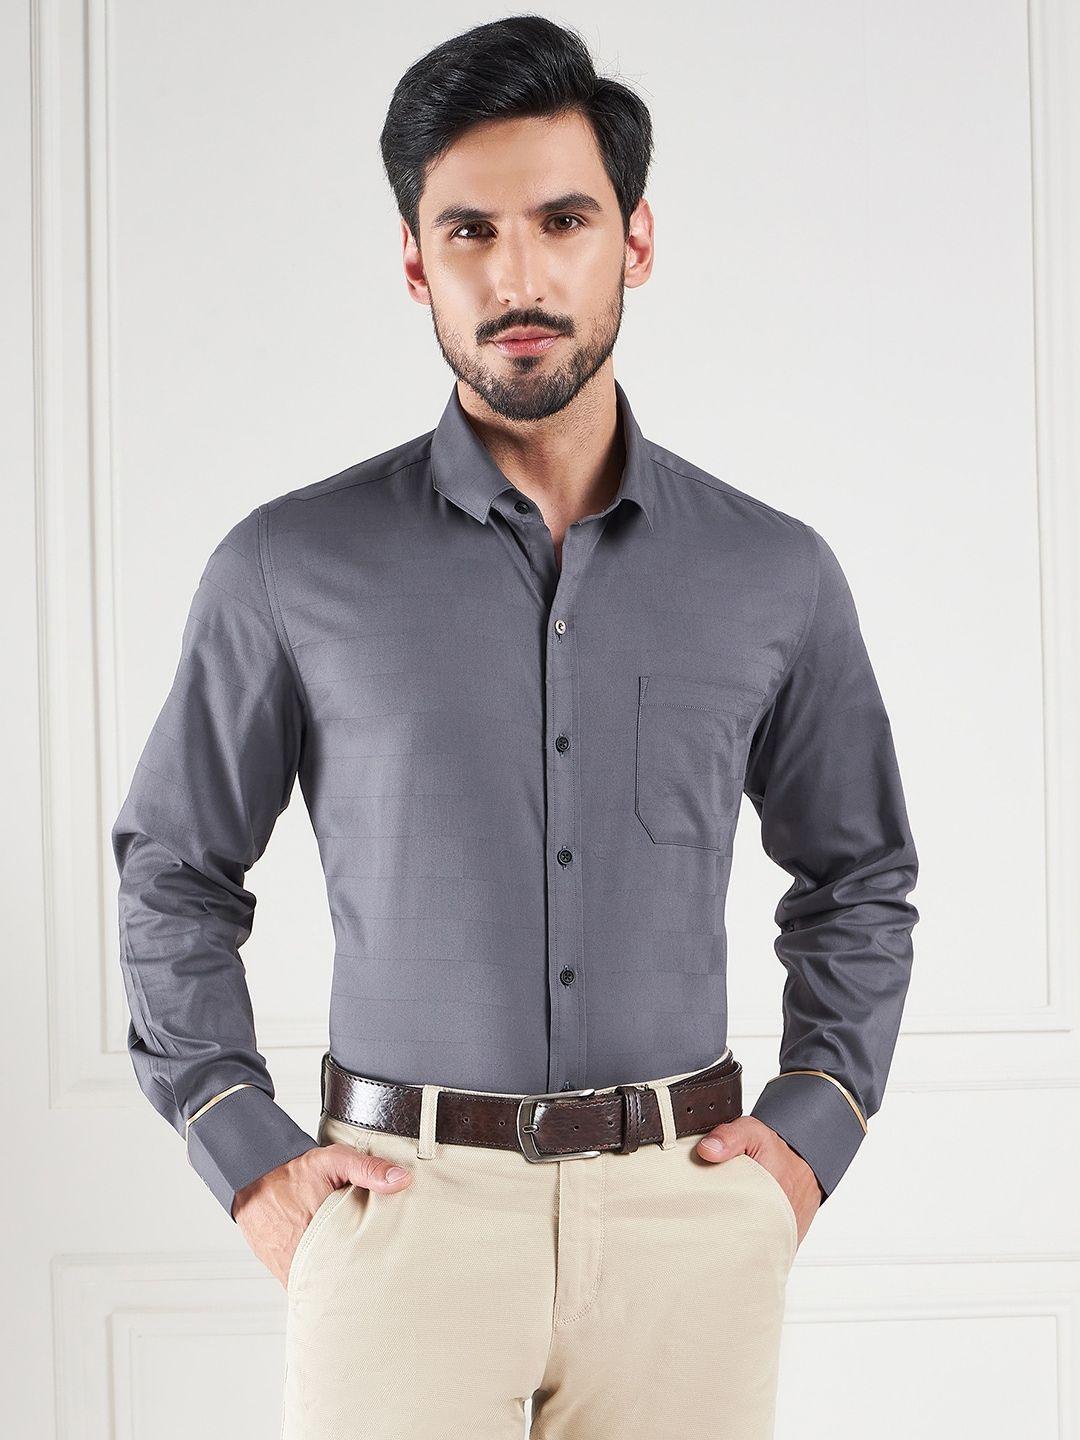 louis stitch cotton comfort opaque formal shirt